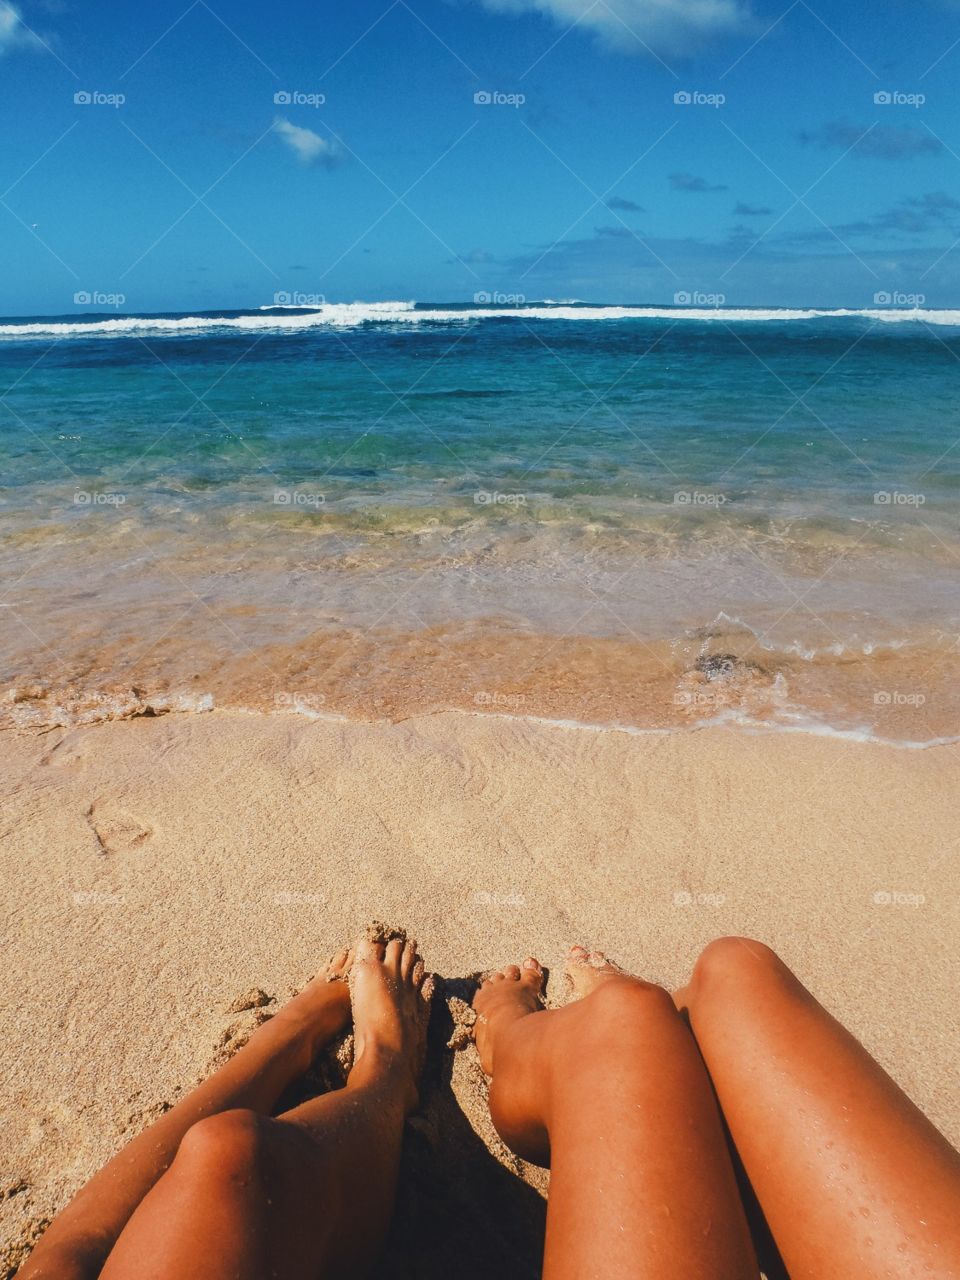 Tan legs relaxing on the beach in Hawaii.